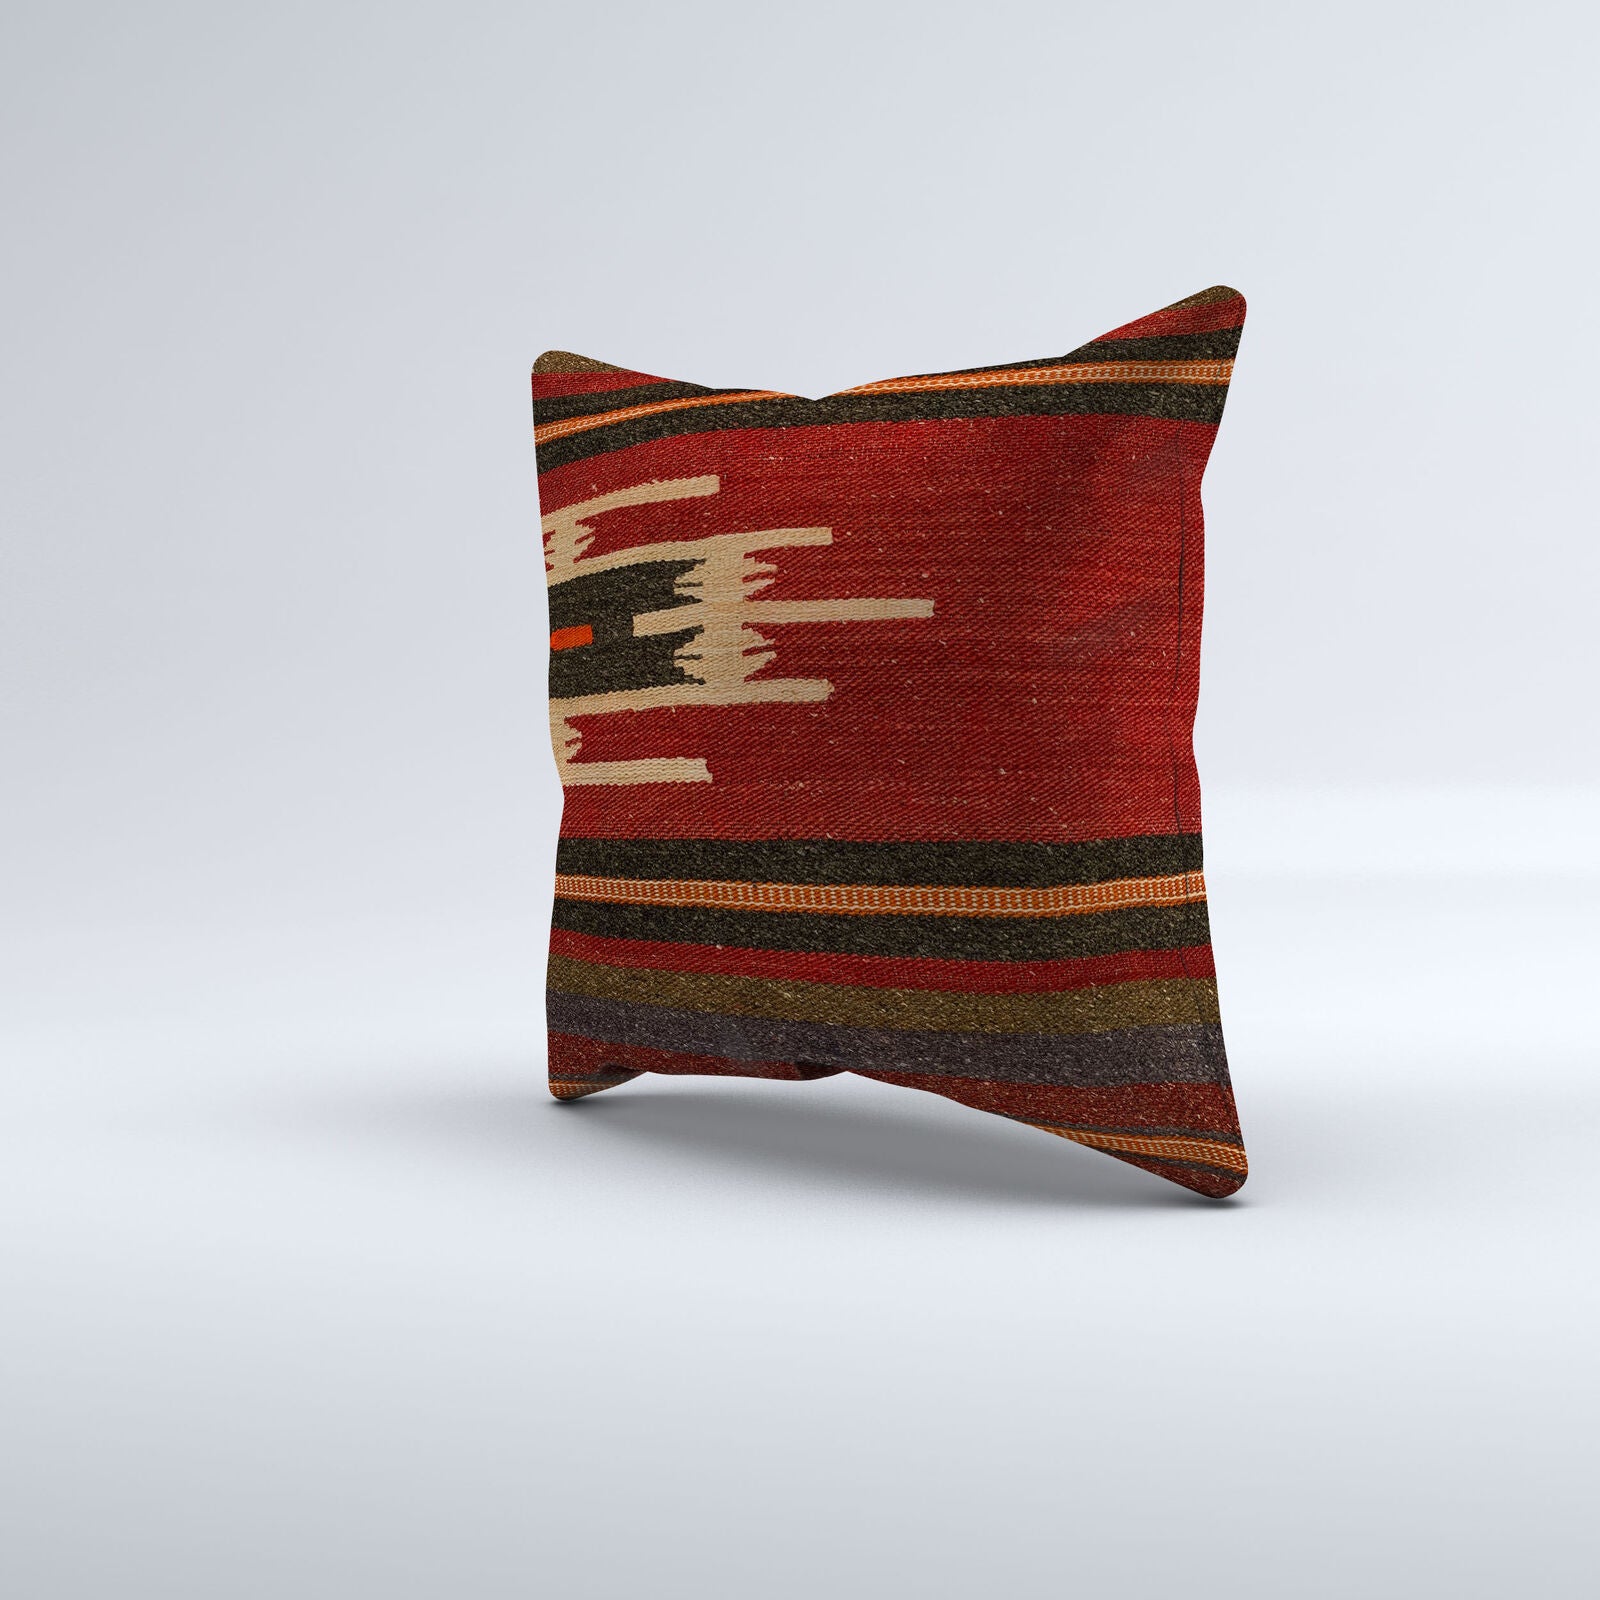 Vintage Turkish Kilim Cushion Cover 40x40 cm 16x16 in  Square Pillowcase 40993